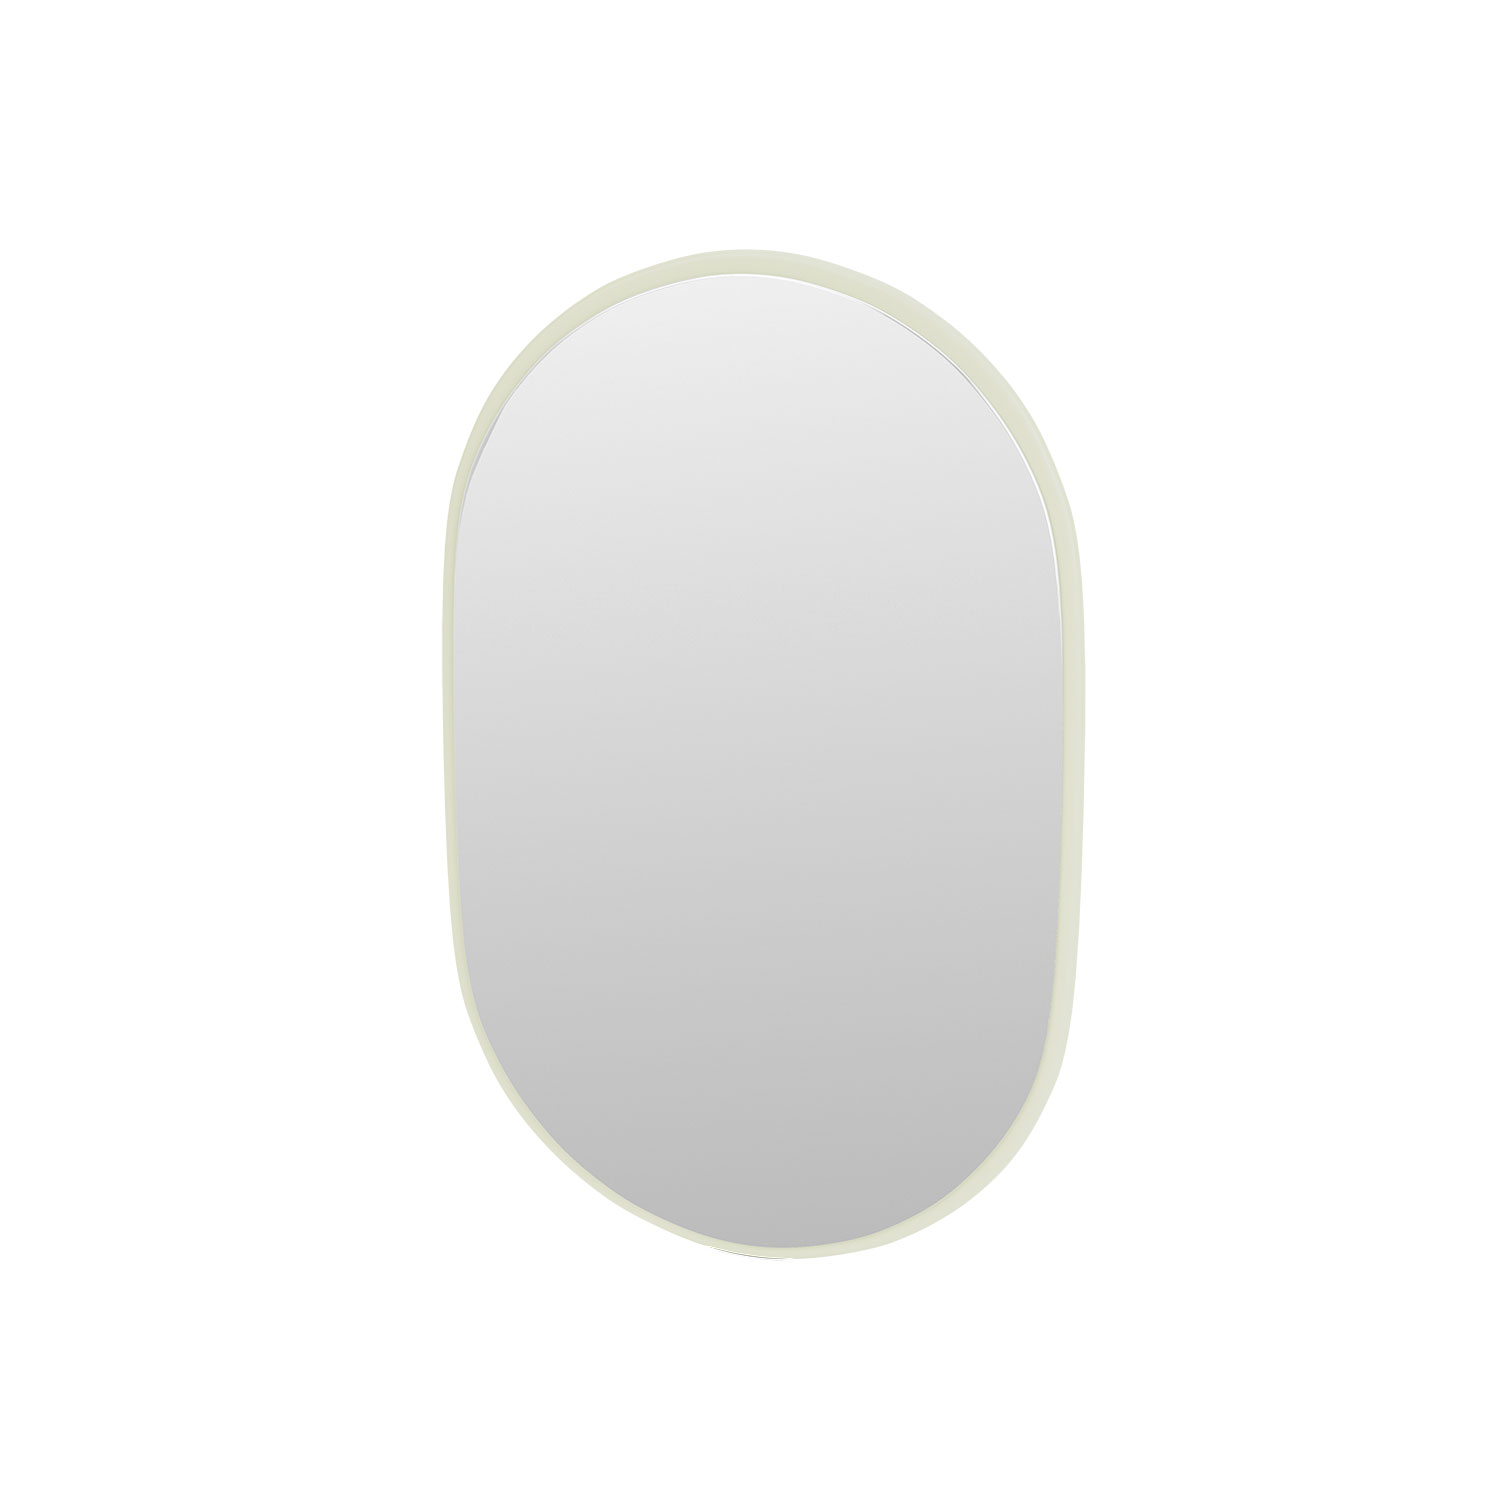 LOOK oval mirror, Pomelo